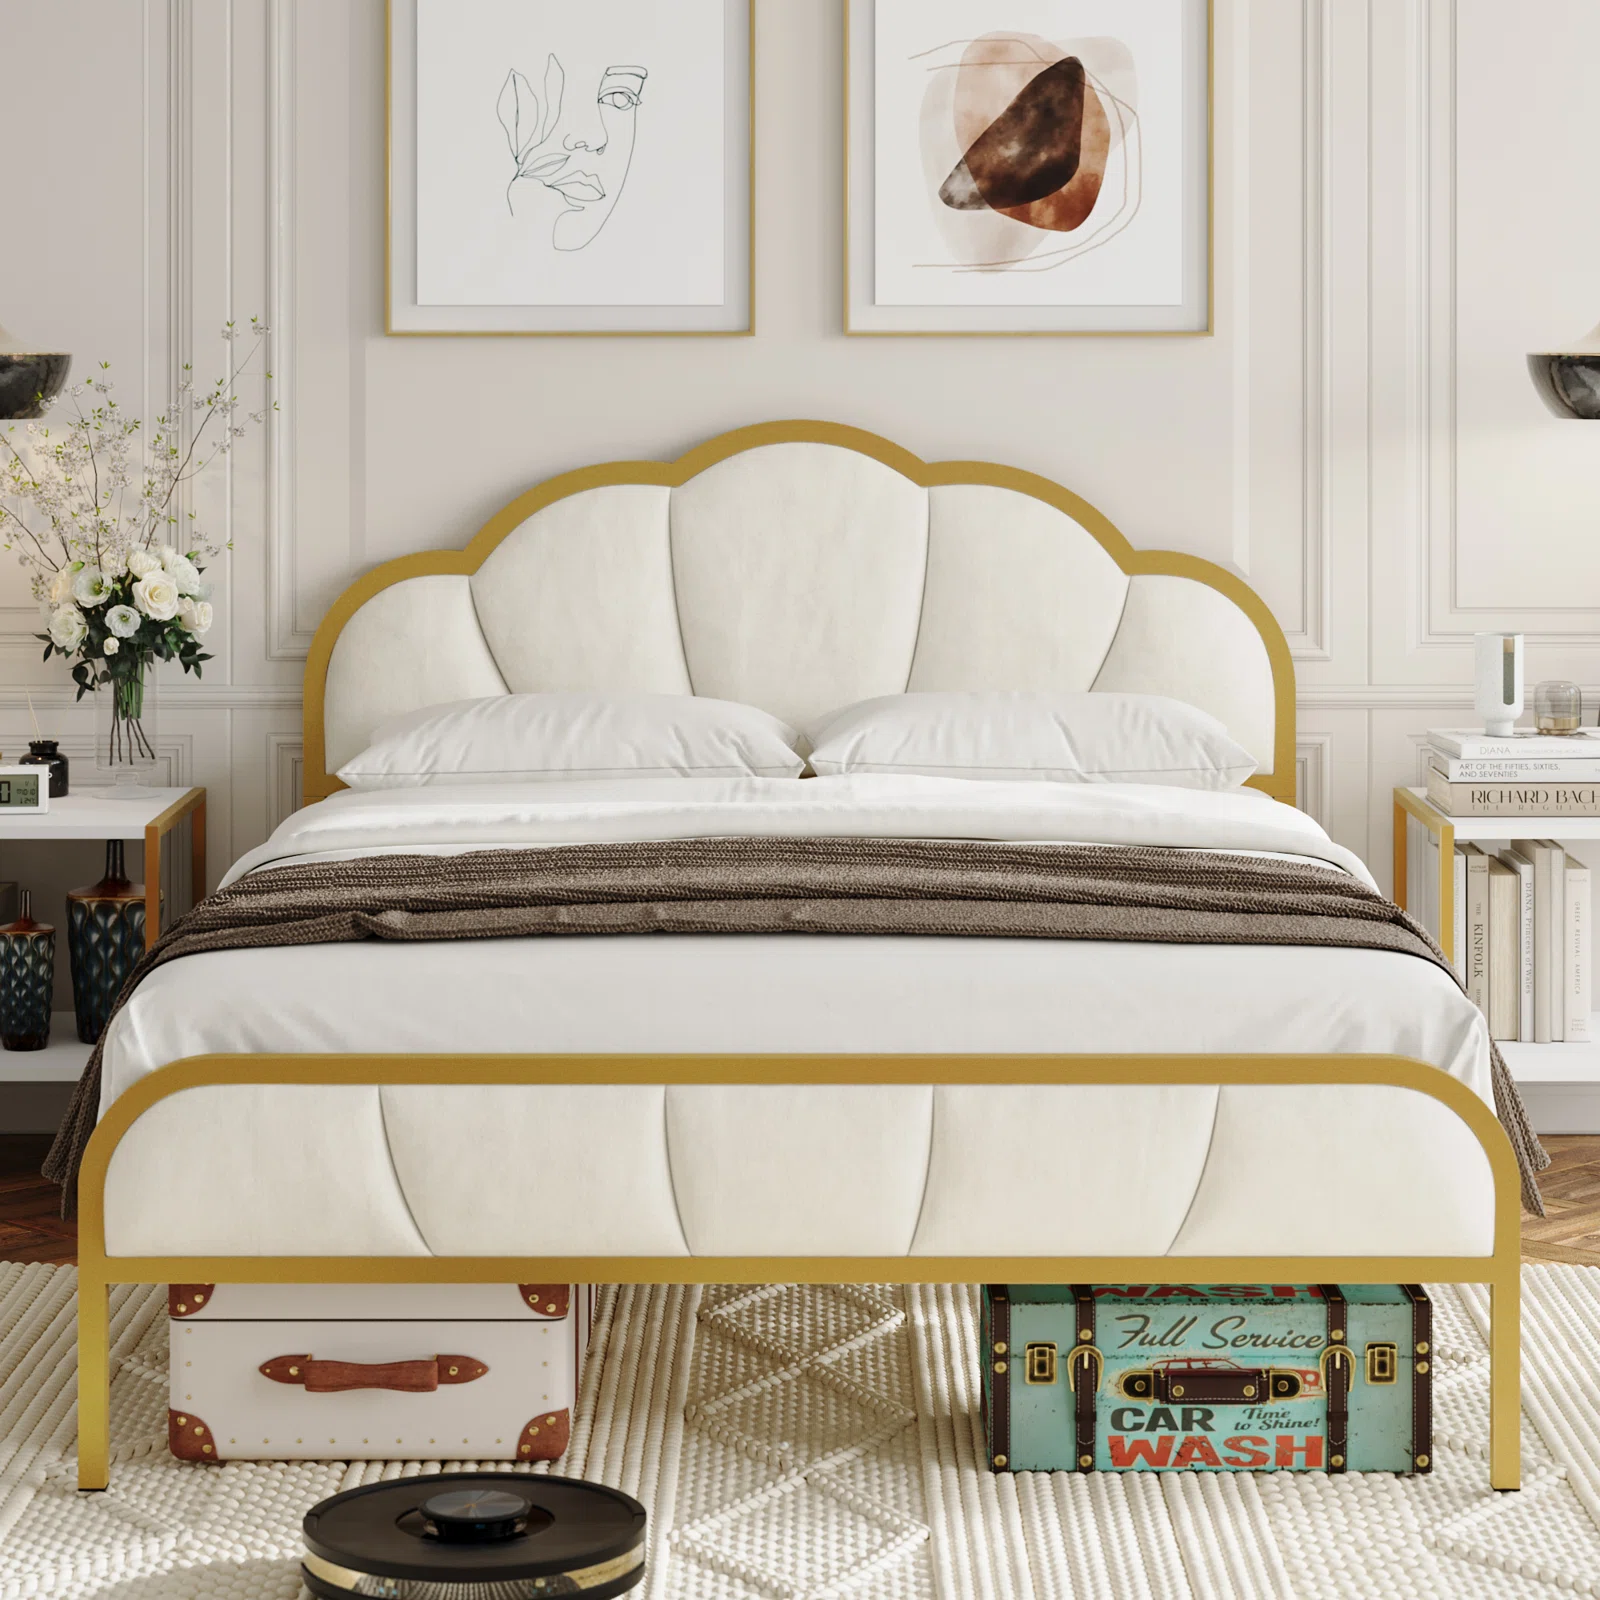 Homfa Queen Size Bed Frame, Golden Velvet Upholstered Platform Bed  with Headboard for Bedroom, Seashell Bed for Kids Girls, Beige - image 3 of 10